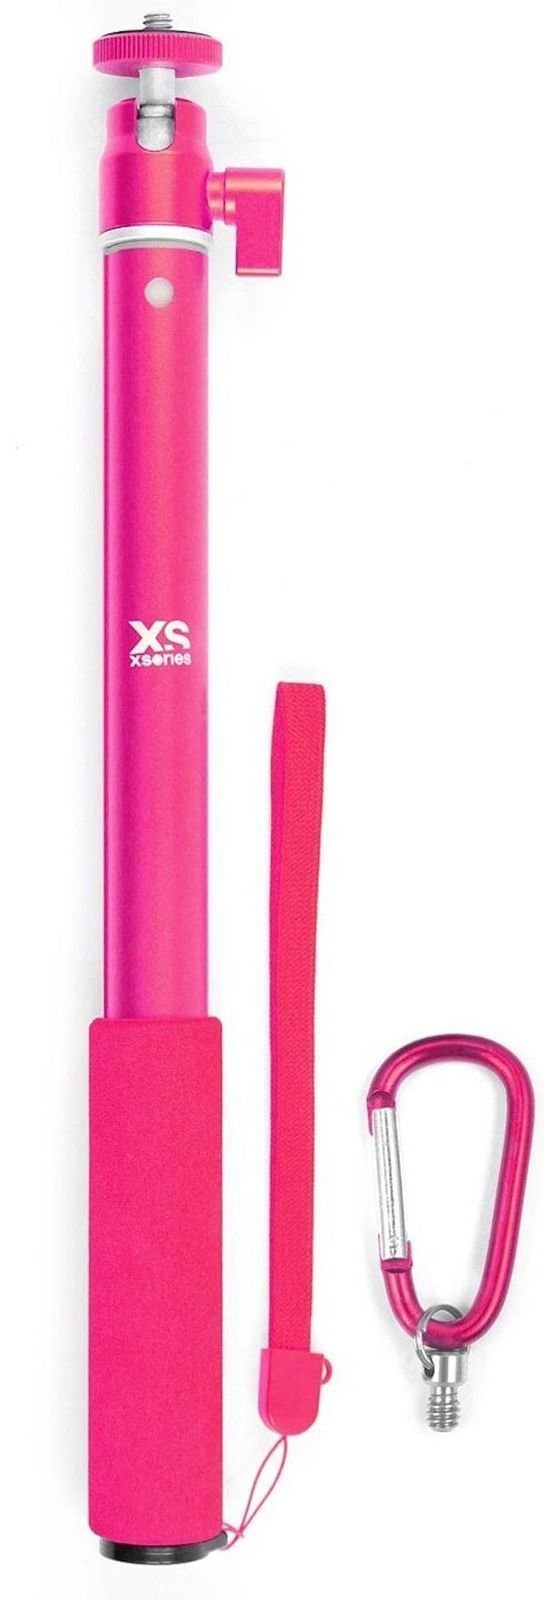 Acessórios GoPro XSories Big U-Shot Pink